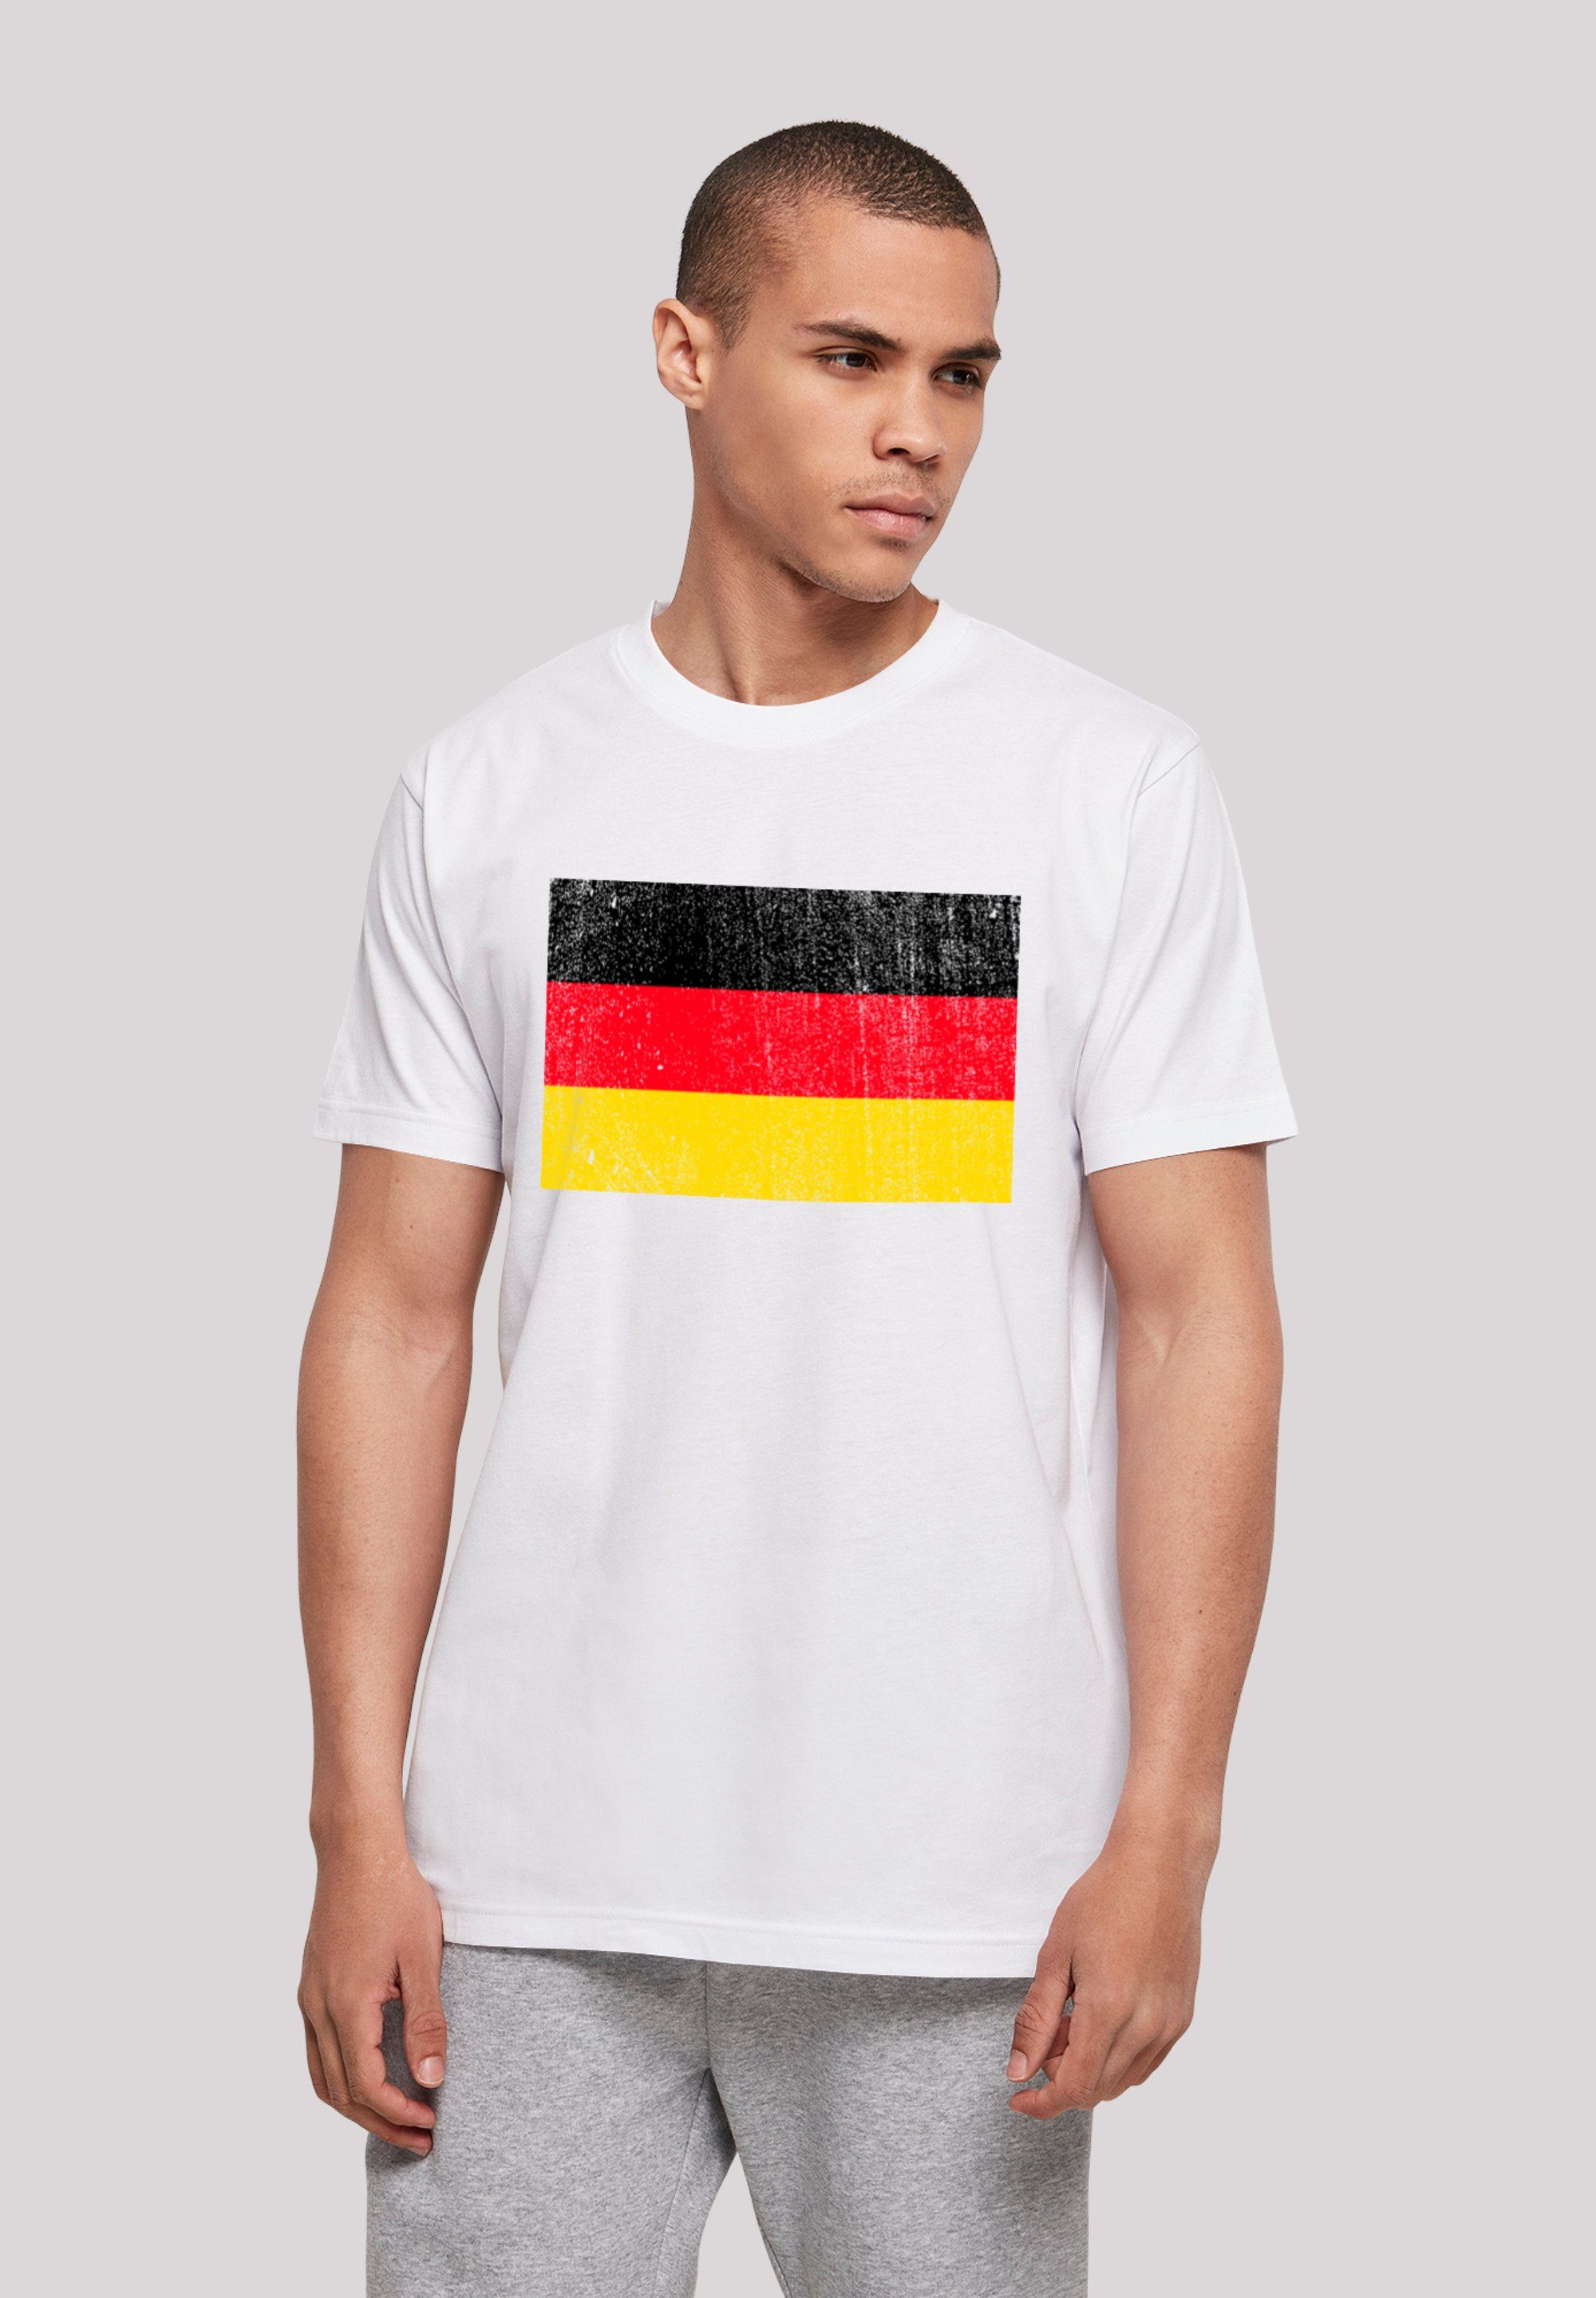 F4NT4STIC T-Shirt Deutschland Flagge Germany distressed Print weiß